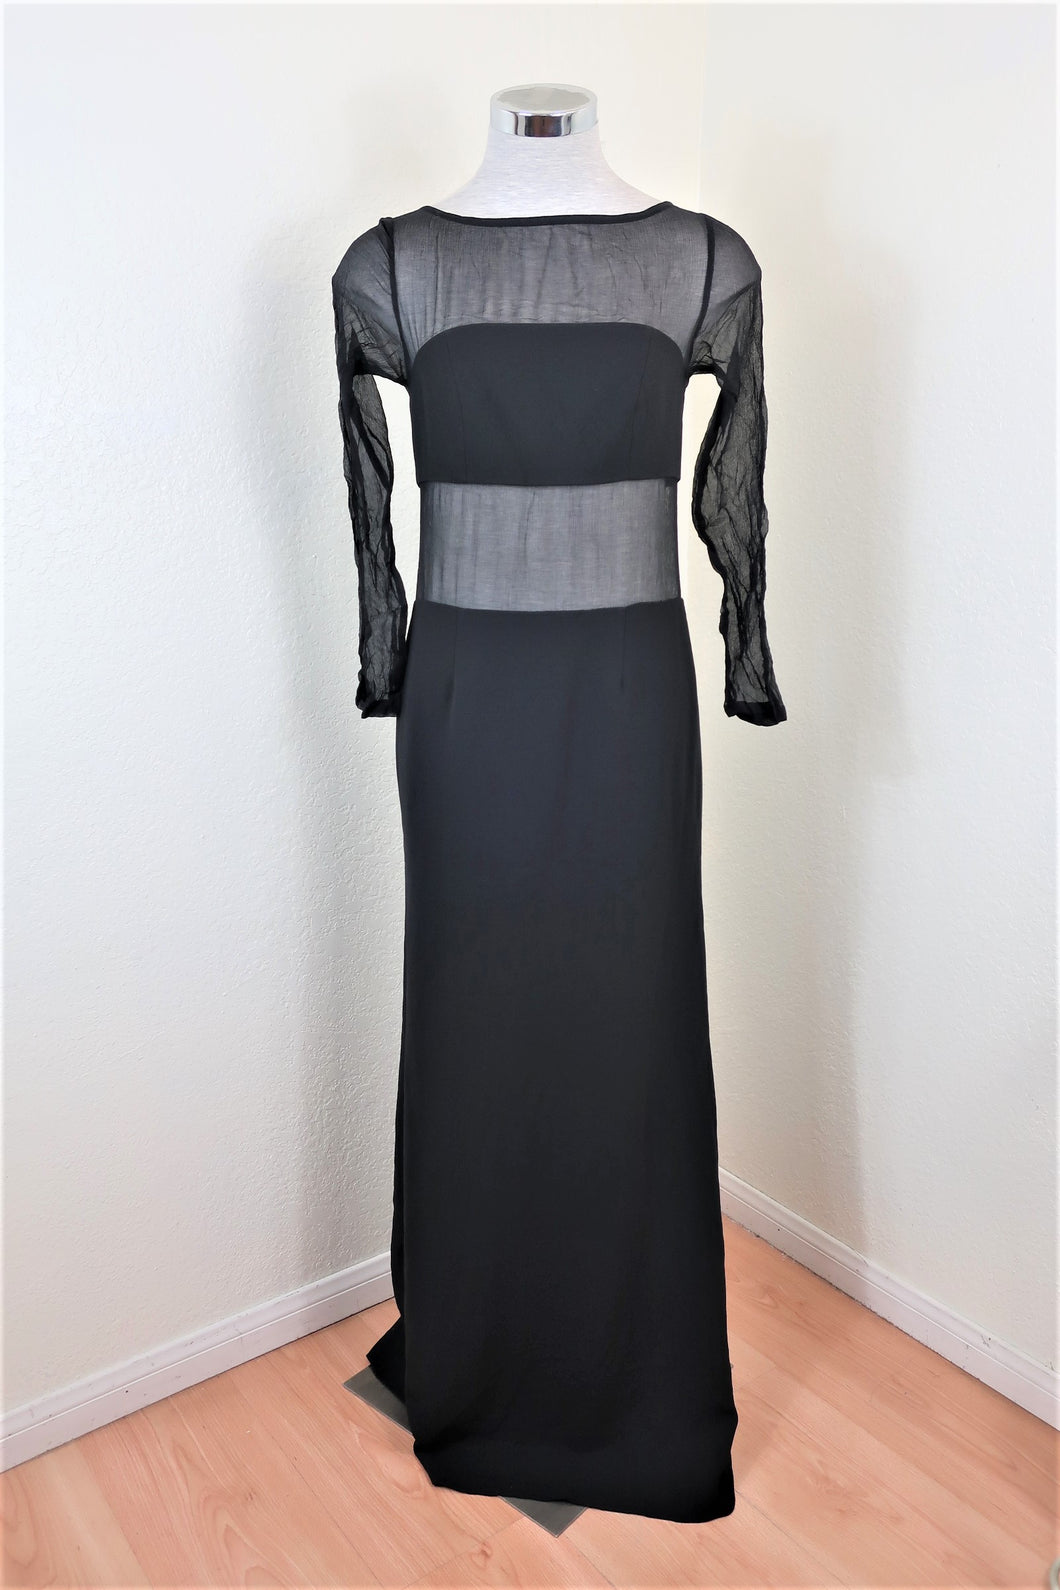 BEATRIZ DA SILVA Black Long Sleeve Mesh Cocktail Dress Gown Tall Small Sz 1 1 2